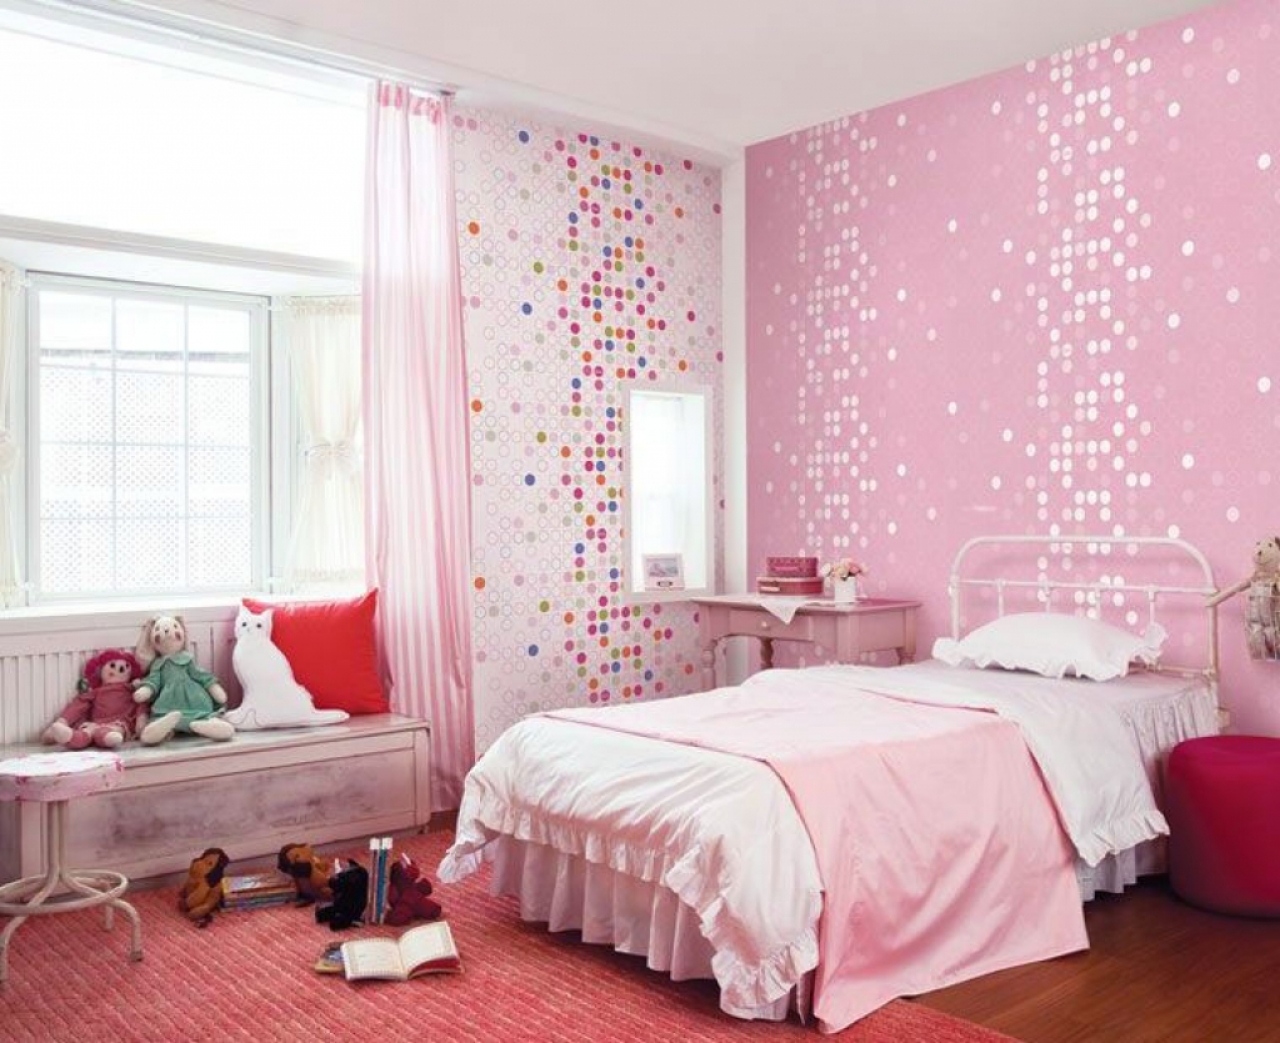 Kids Room Cute Pink Dotty Wallpaper Girls Bedroom Home Design